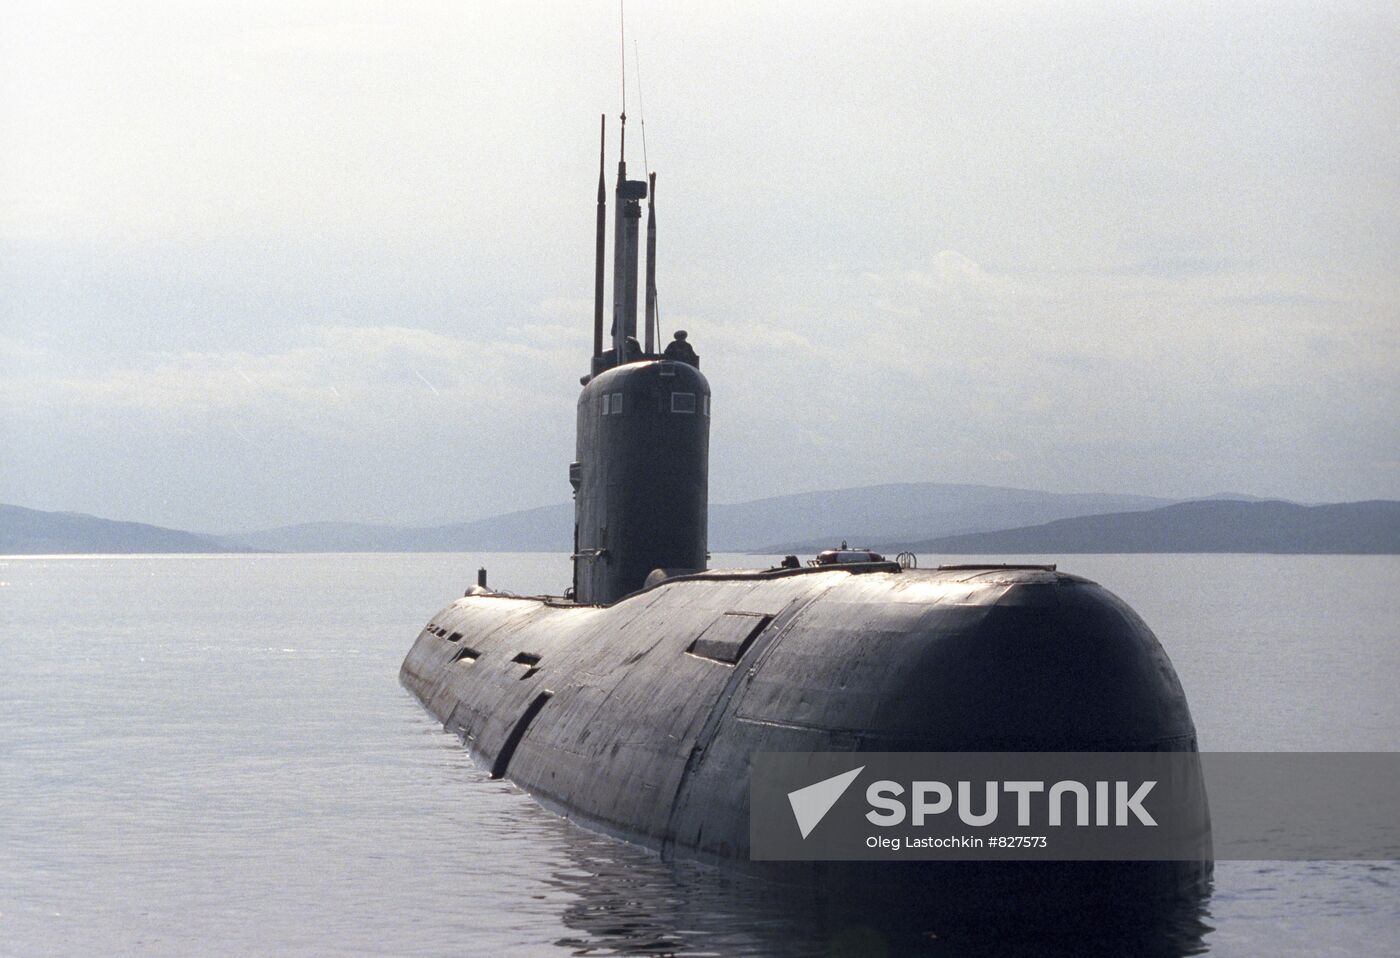 Project 636 Varshavyanka (Kilo-class) diesel submarine